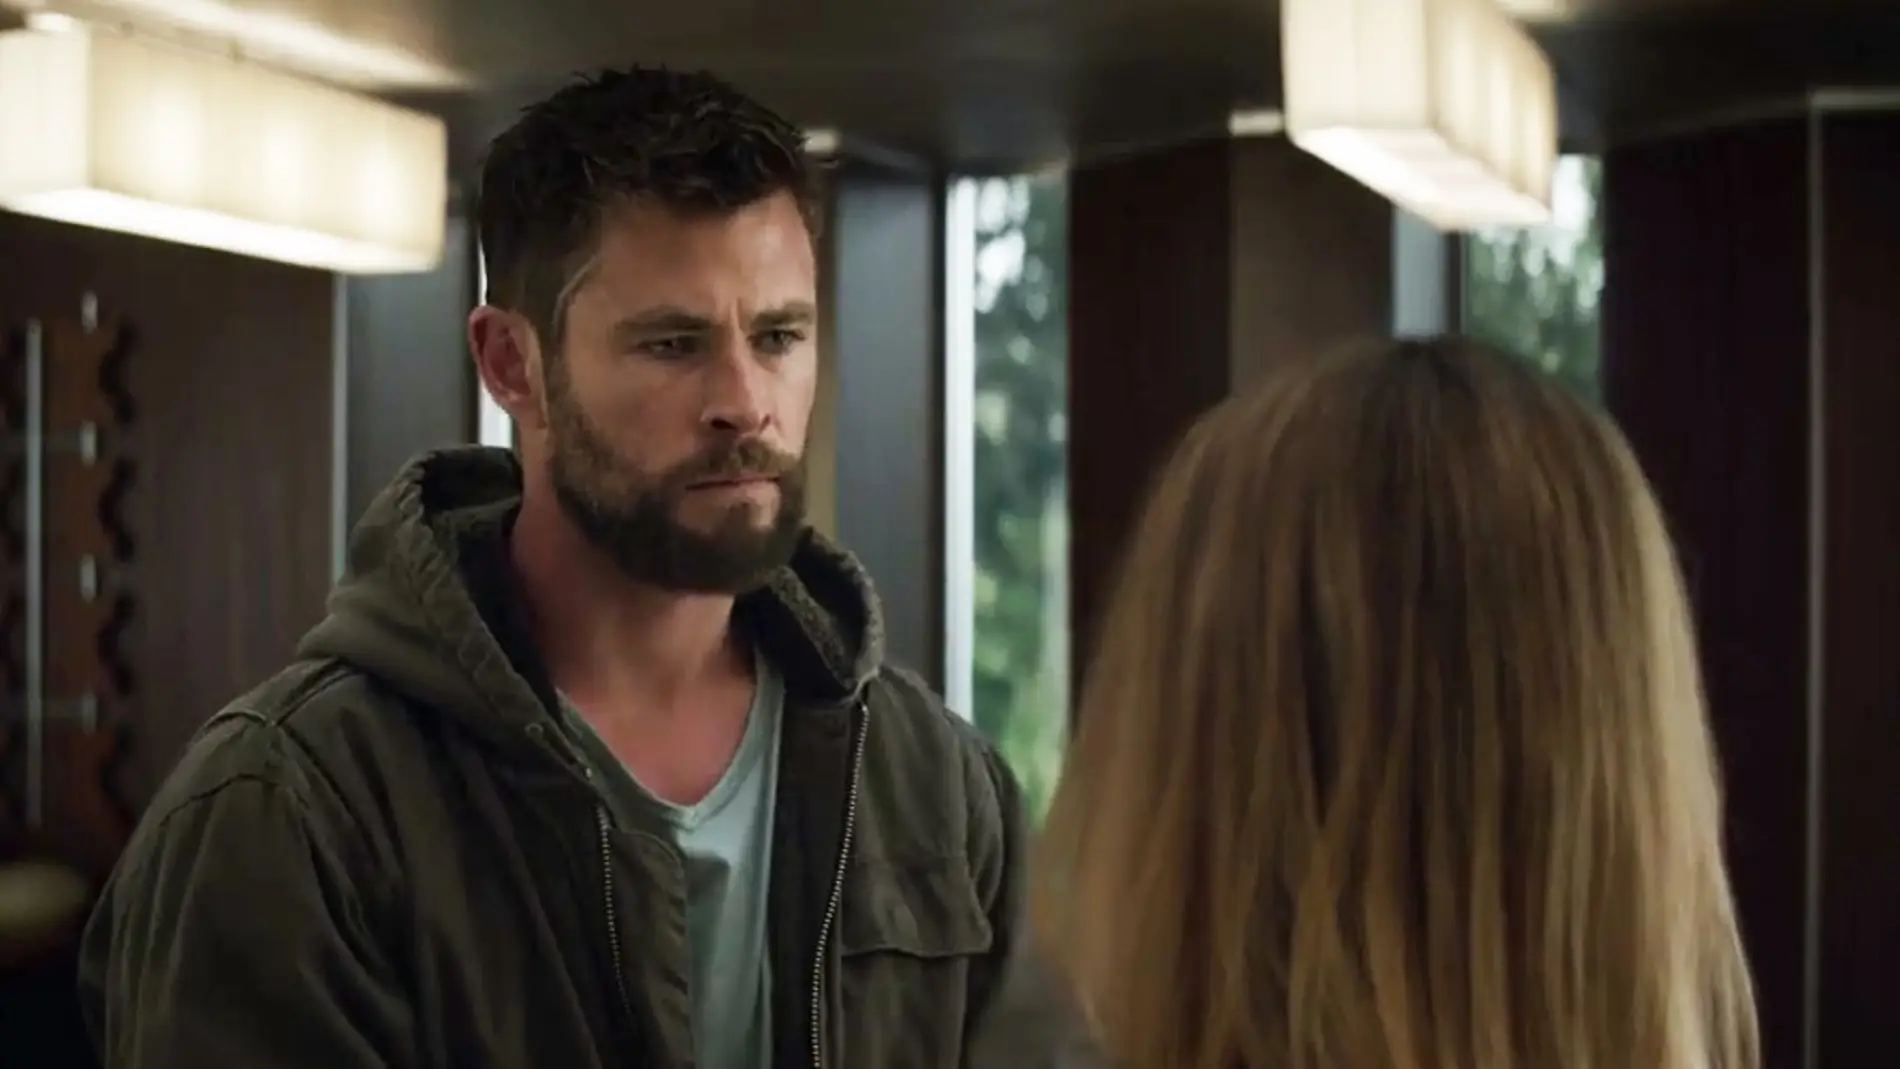 Chris Hemsworth en 'Vengadores: Endgame'